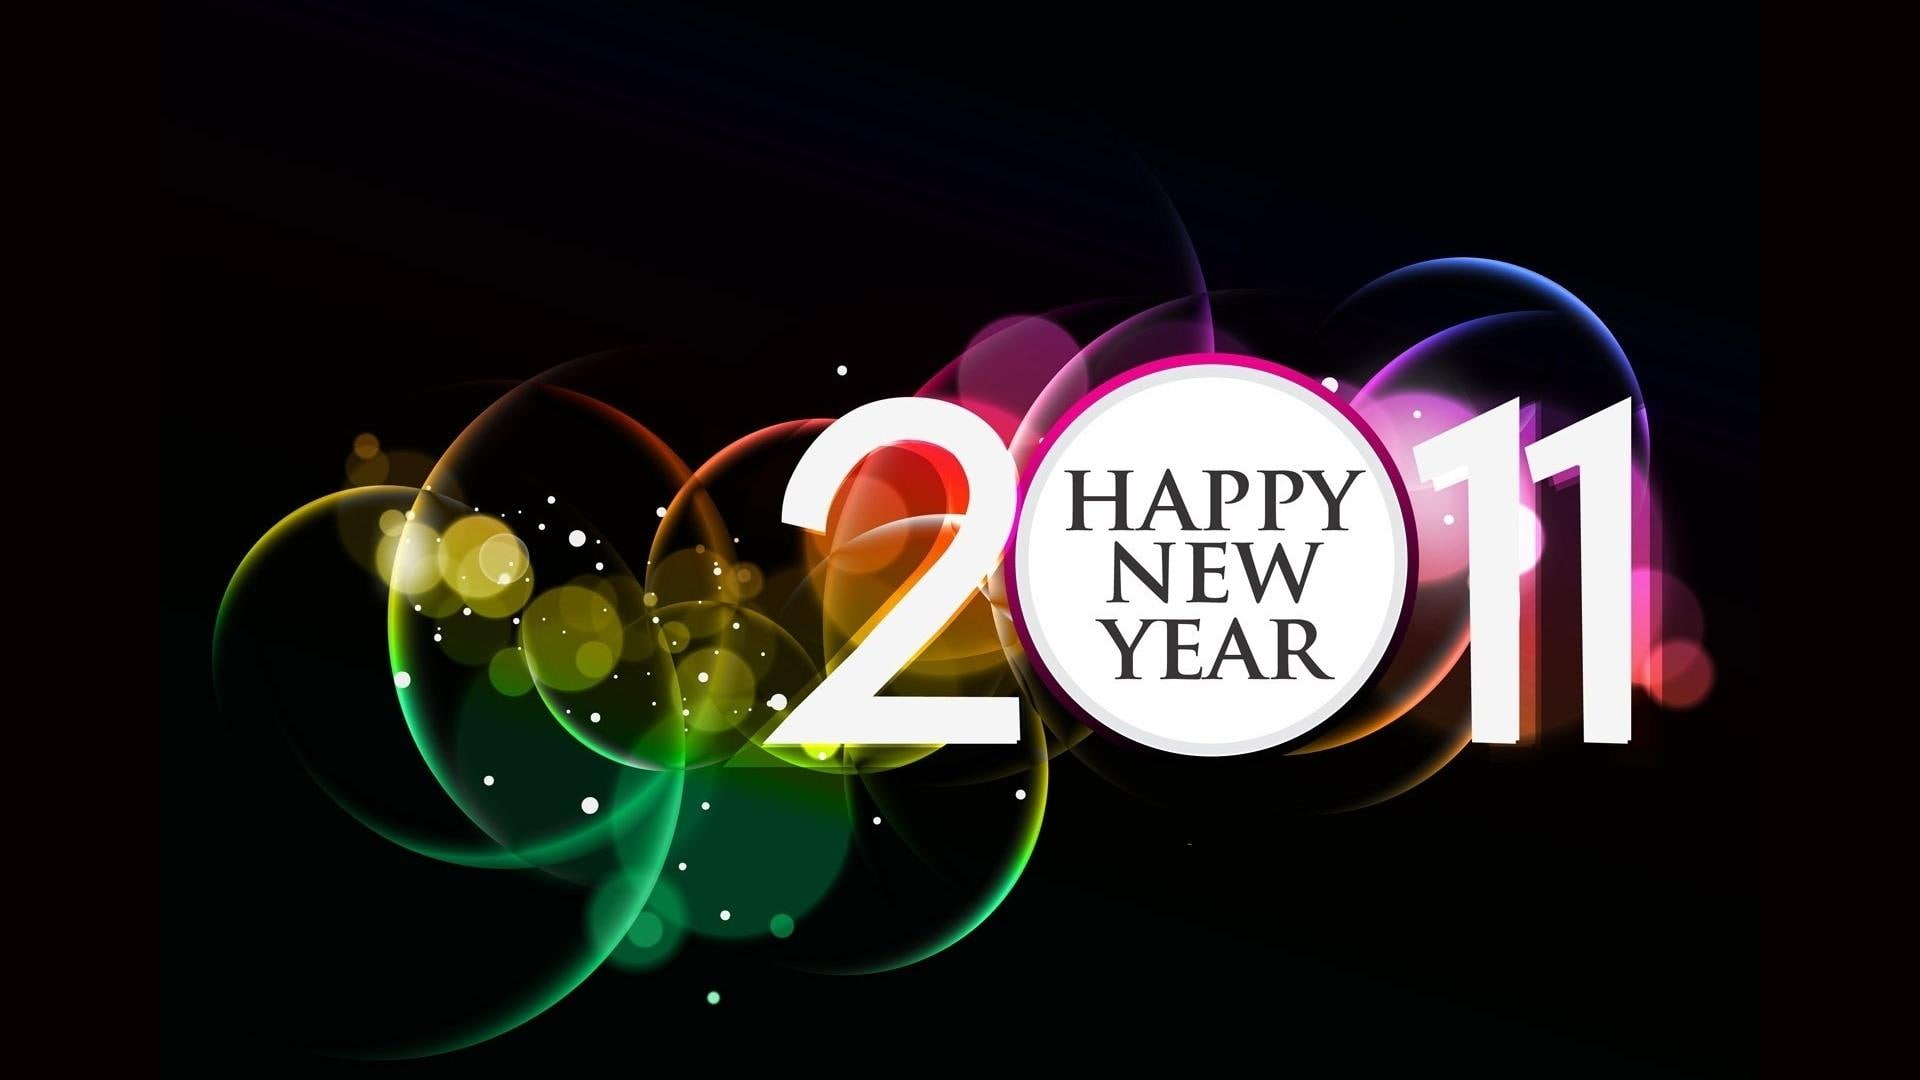 Happy New 2011 Year, new year